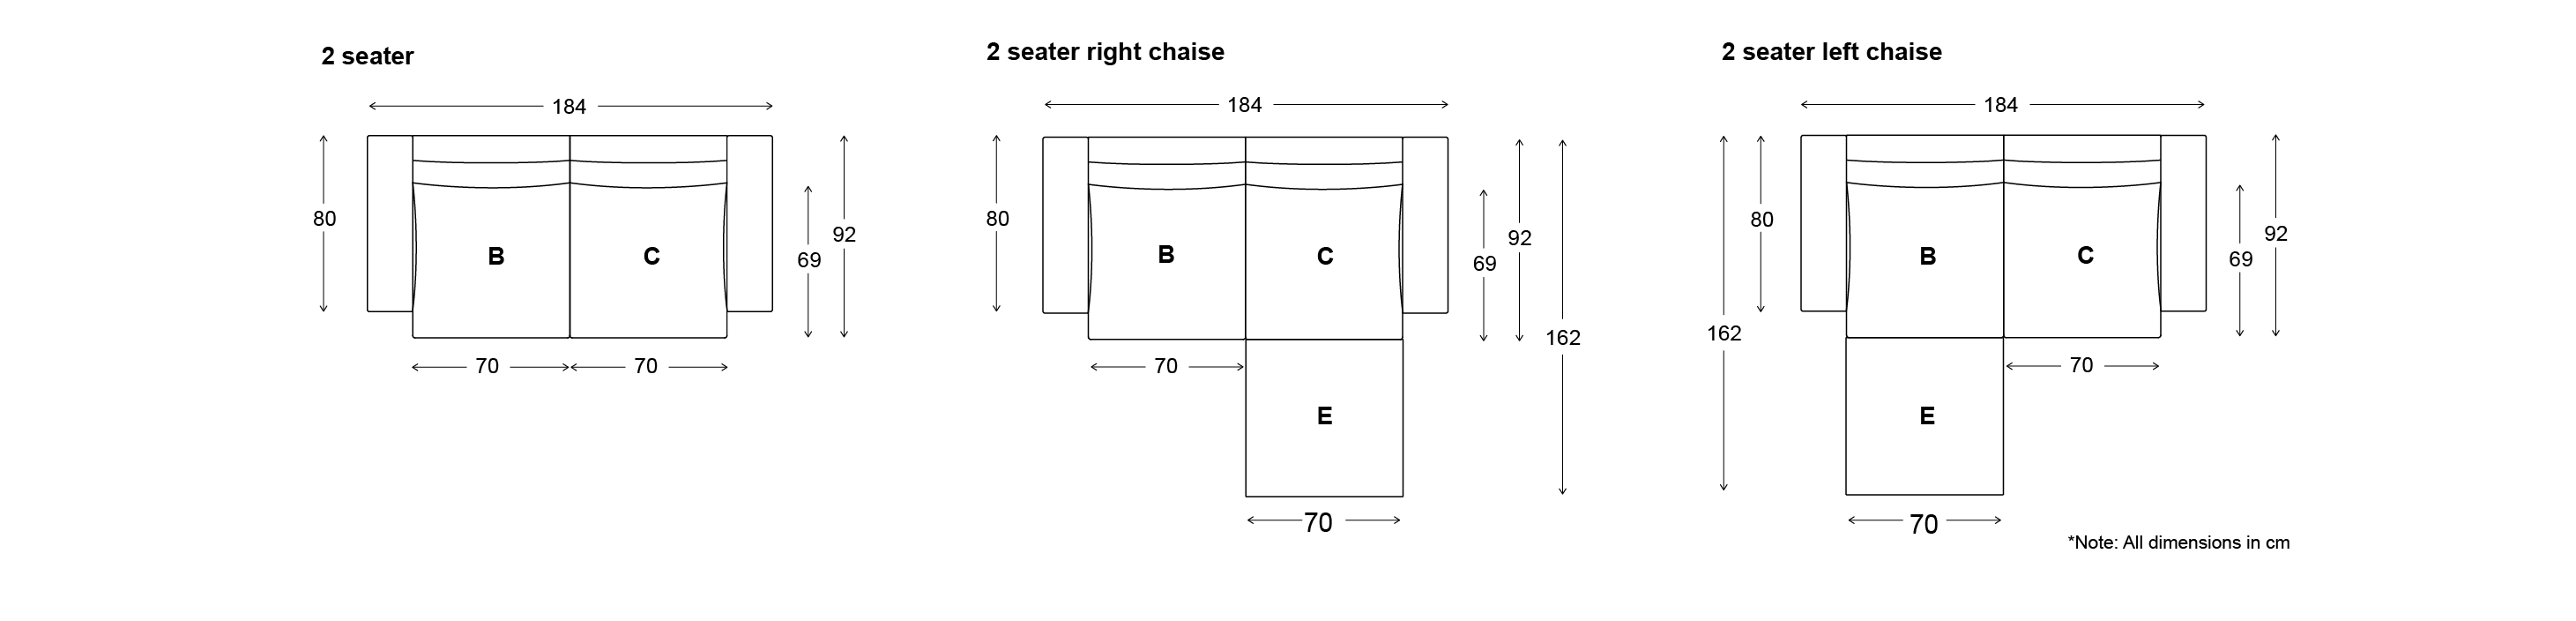 modular sofa 2 seater chaise dimensions